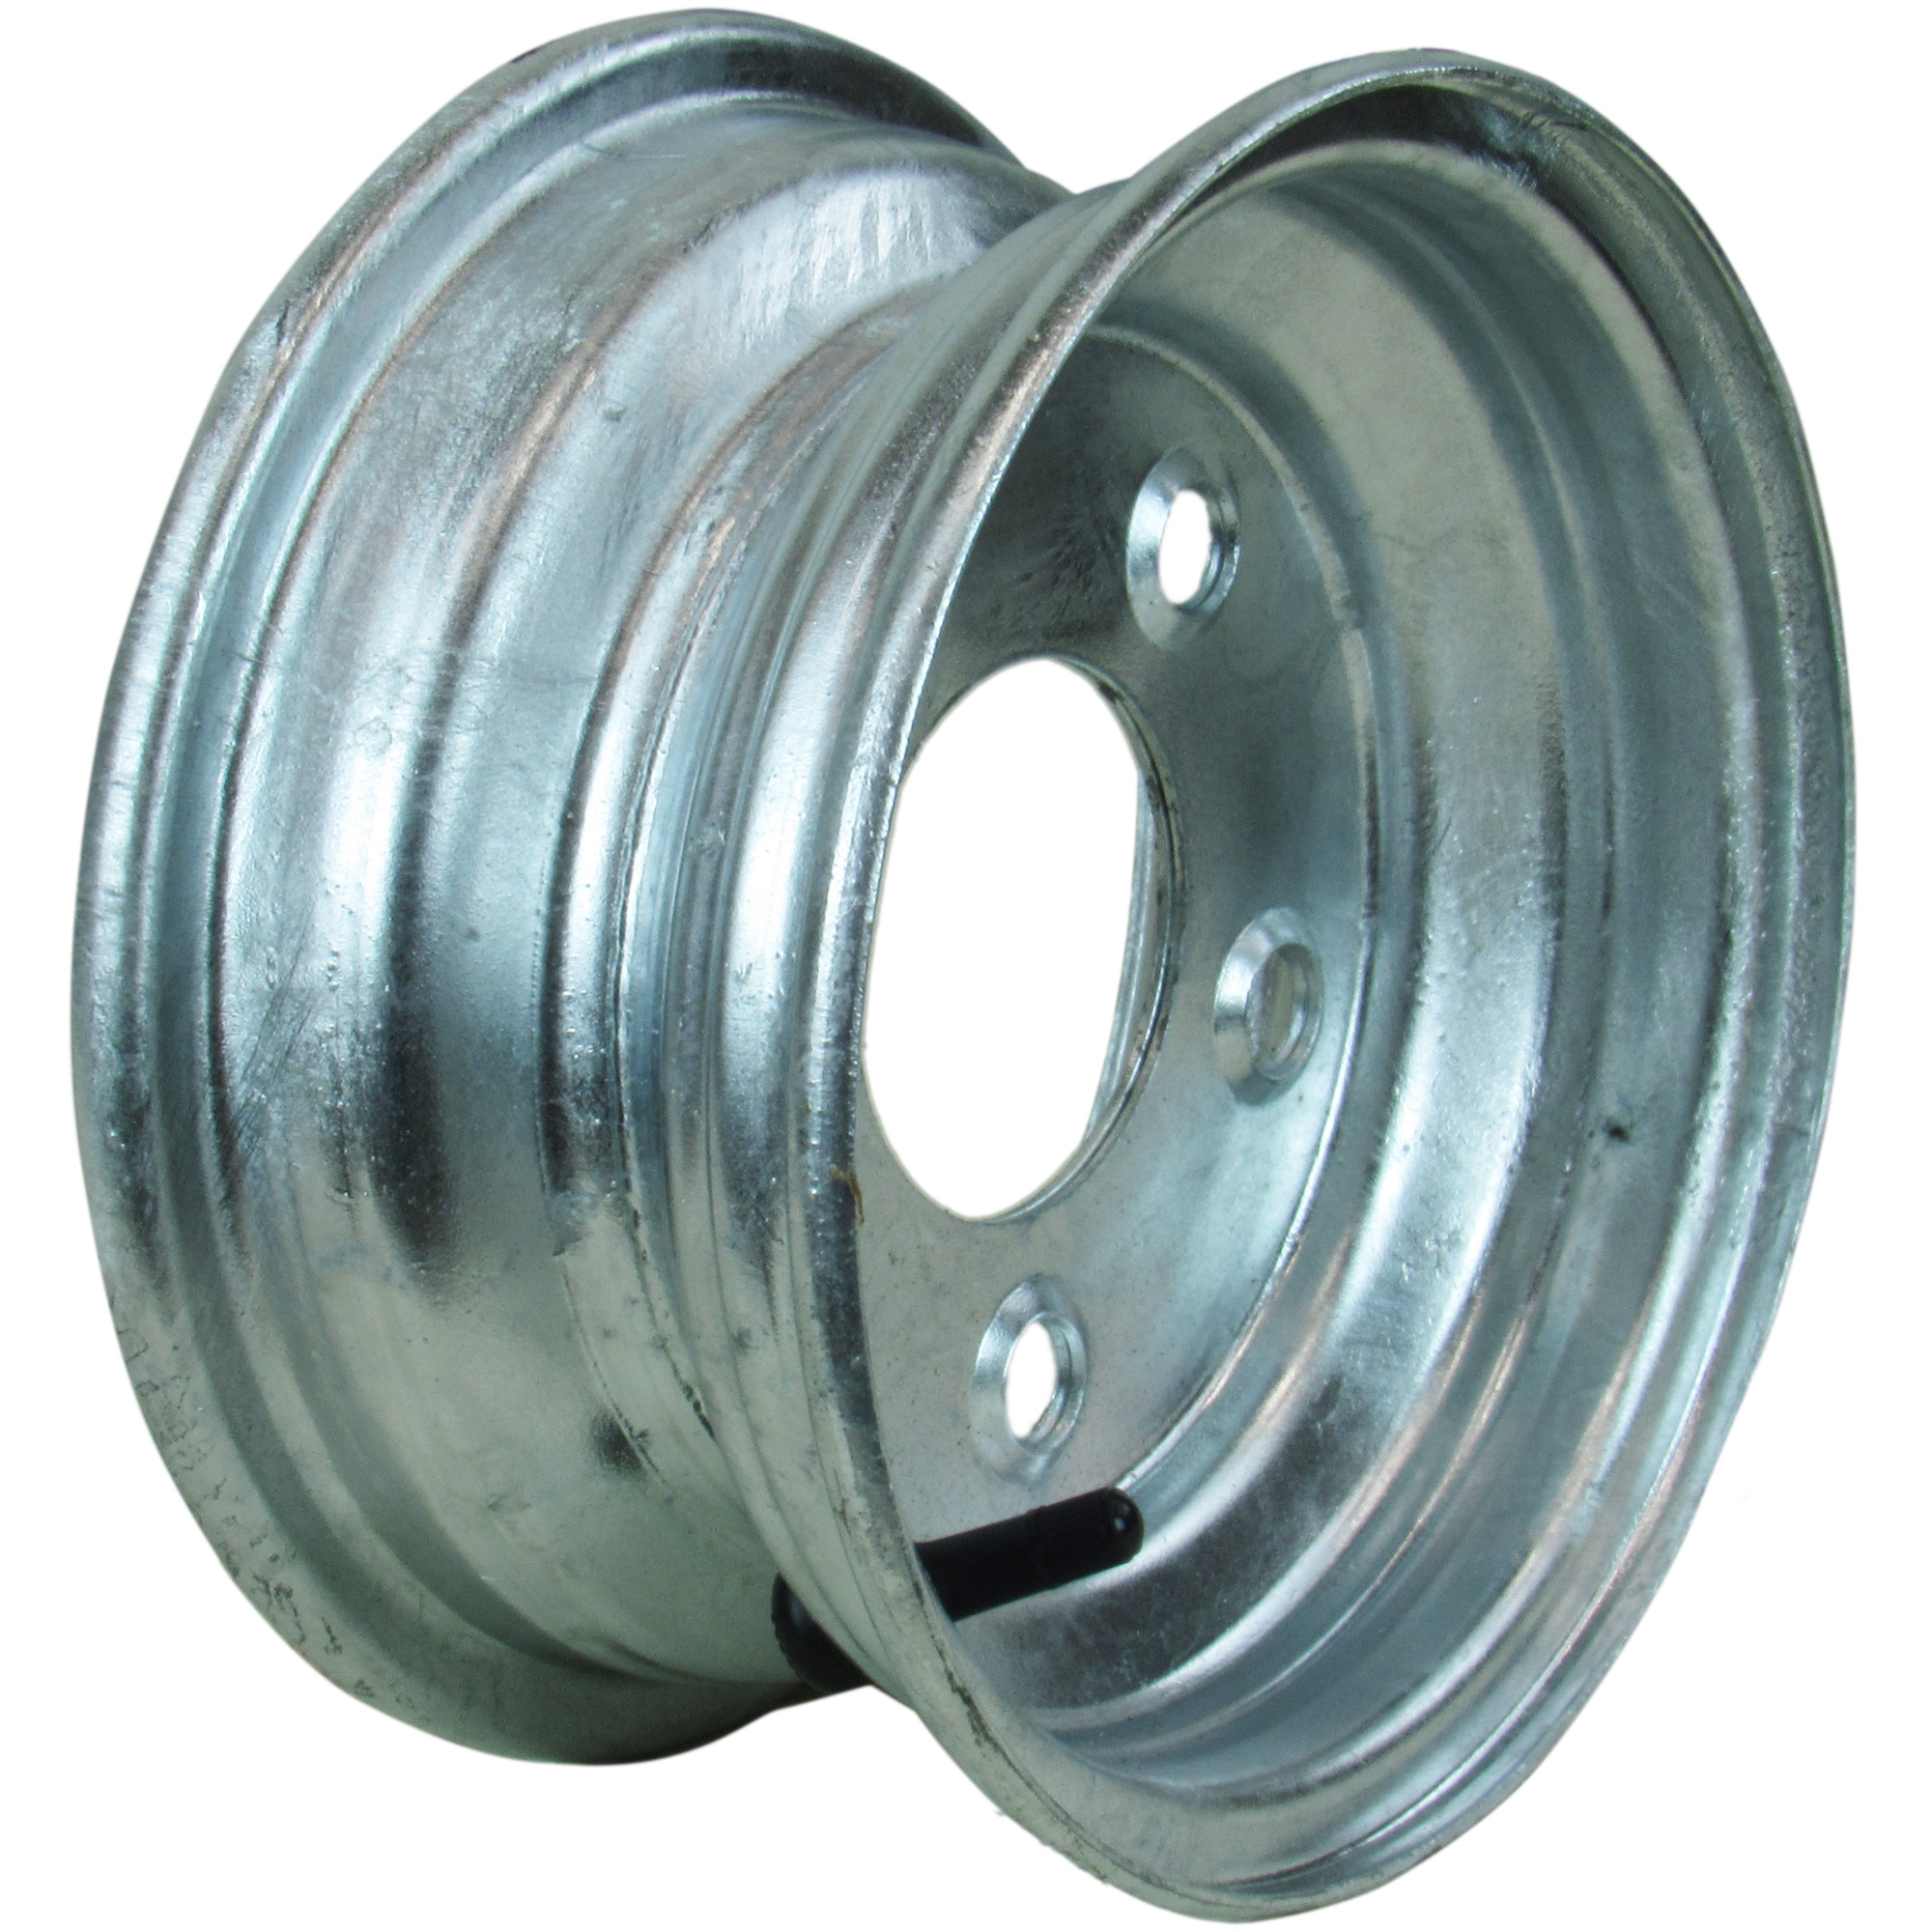 HI-RUN, Galvanized Steel Wheel for Highway Trailer, Tire Size 8X3.75 5-4.5, Bolt Holes (qty.) 5, Model NB2009